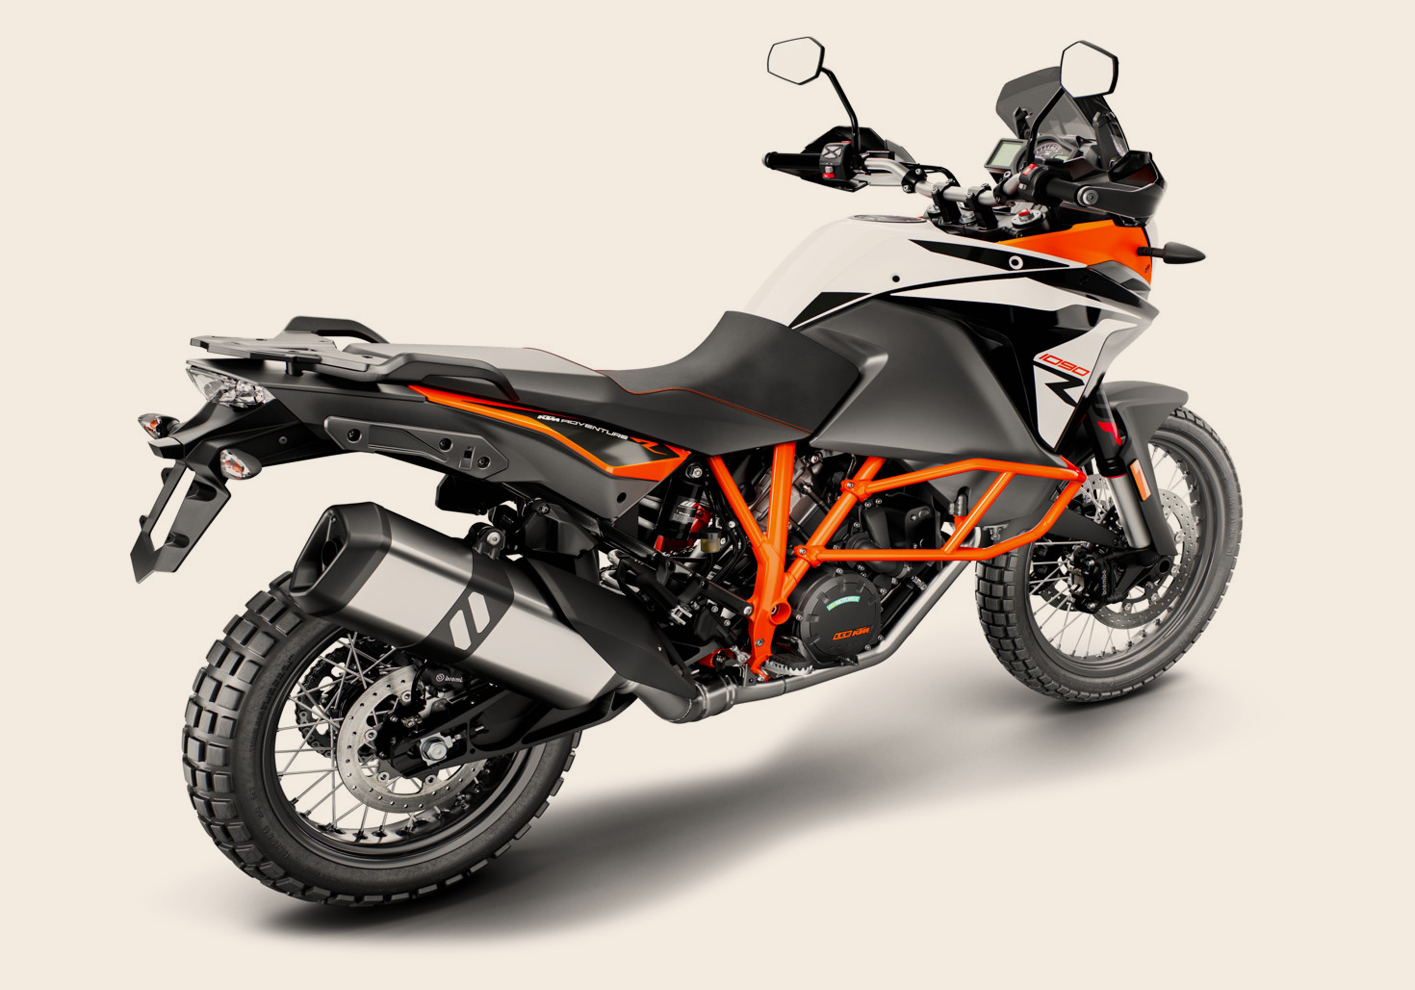 KTM 1090 Adventure motorcycle white orange and black